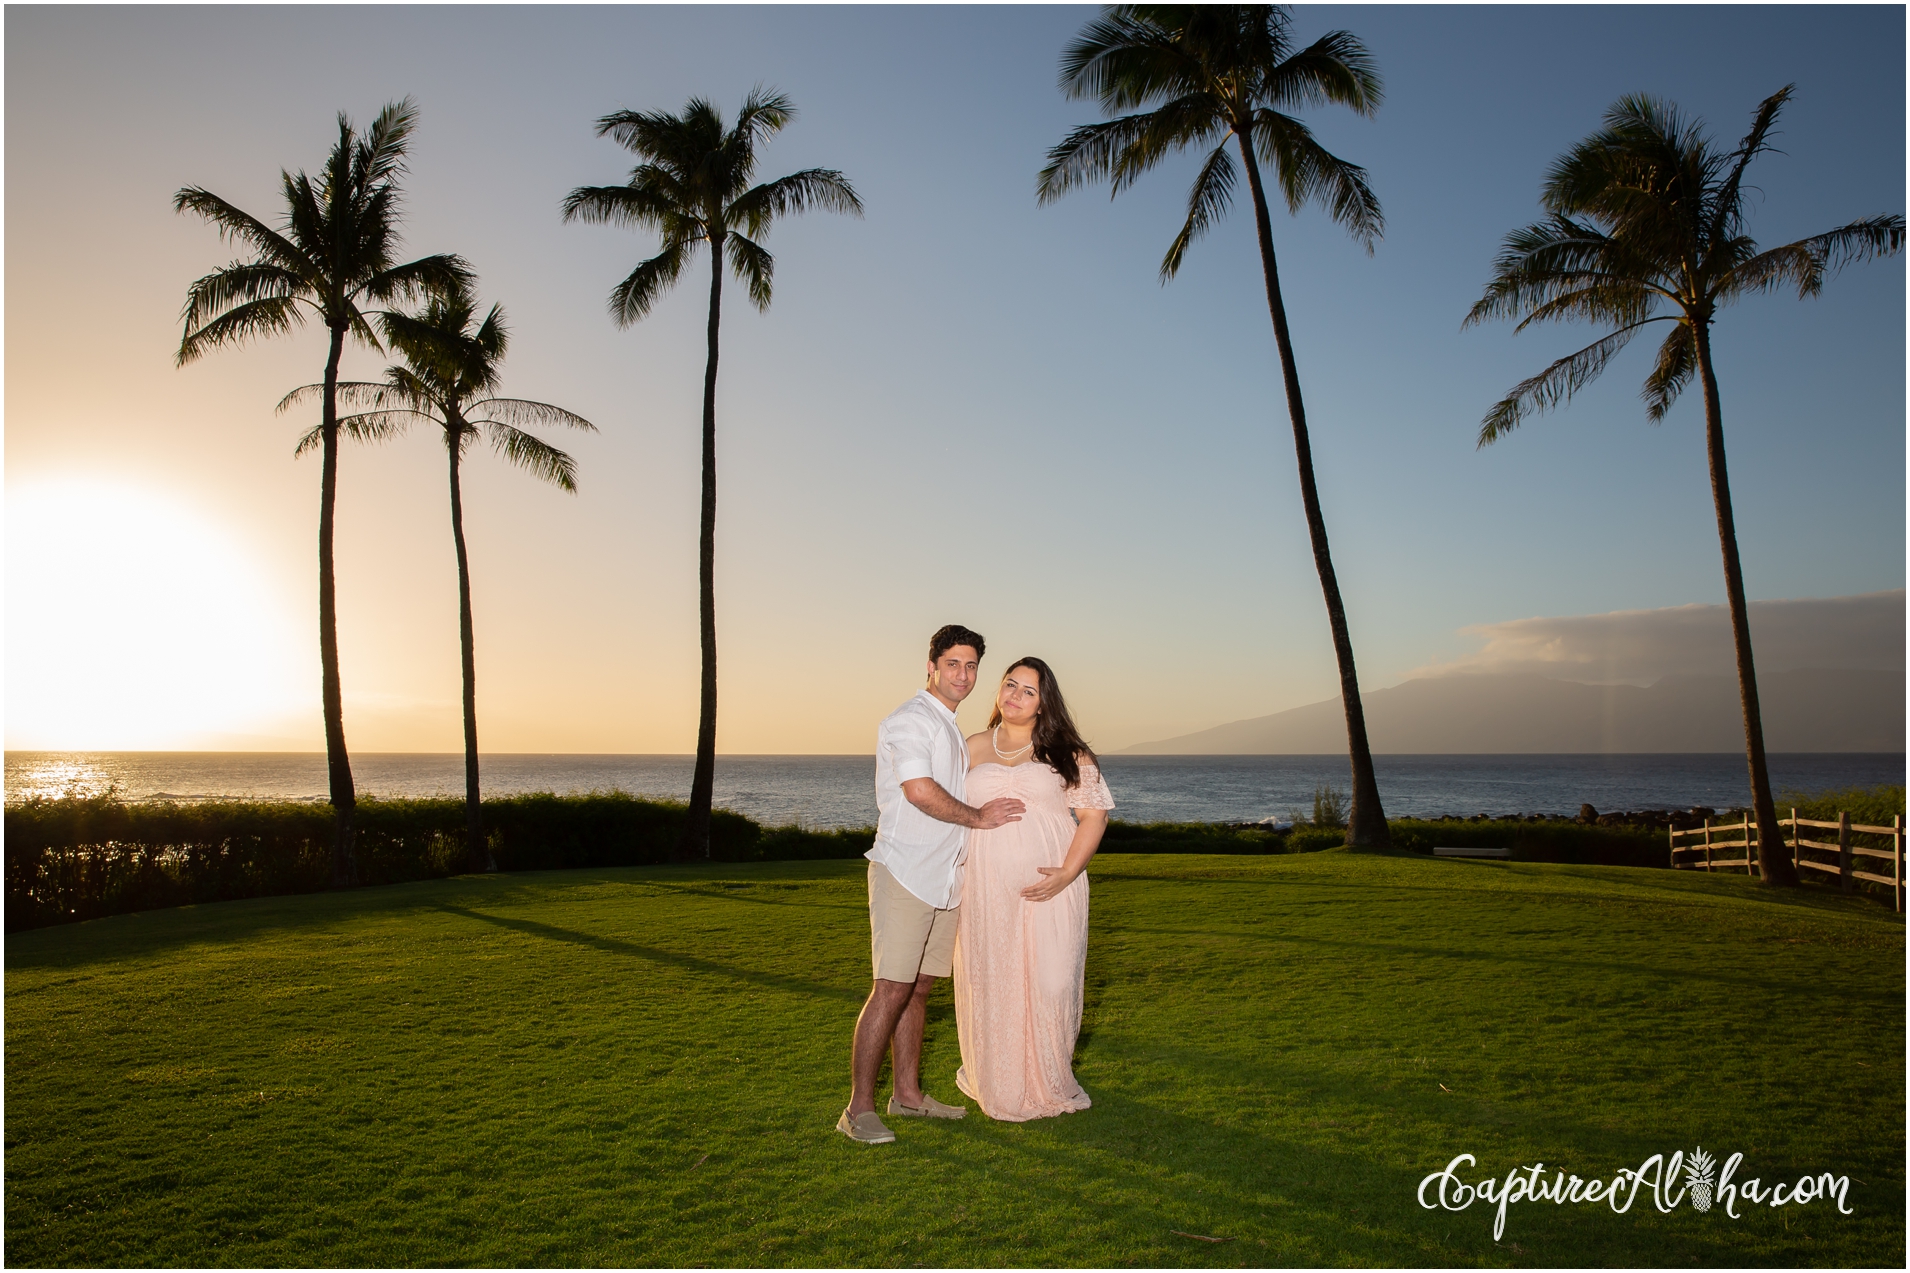 Maui Maternity Photographer at Kapalua Bay Beach at sunset